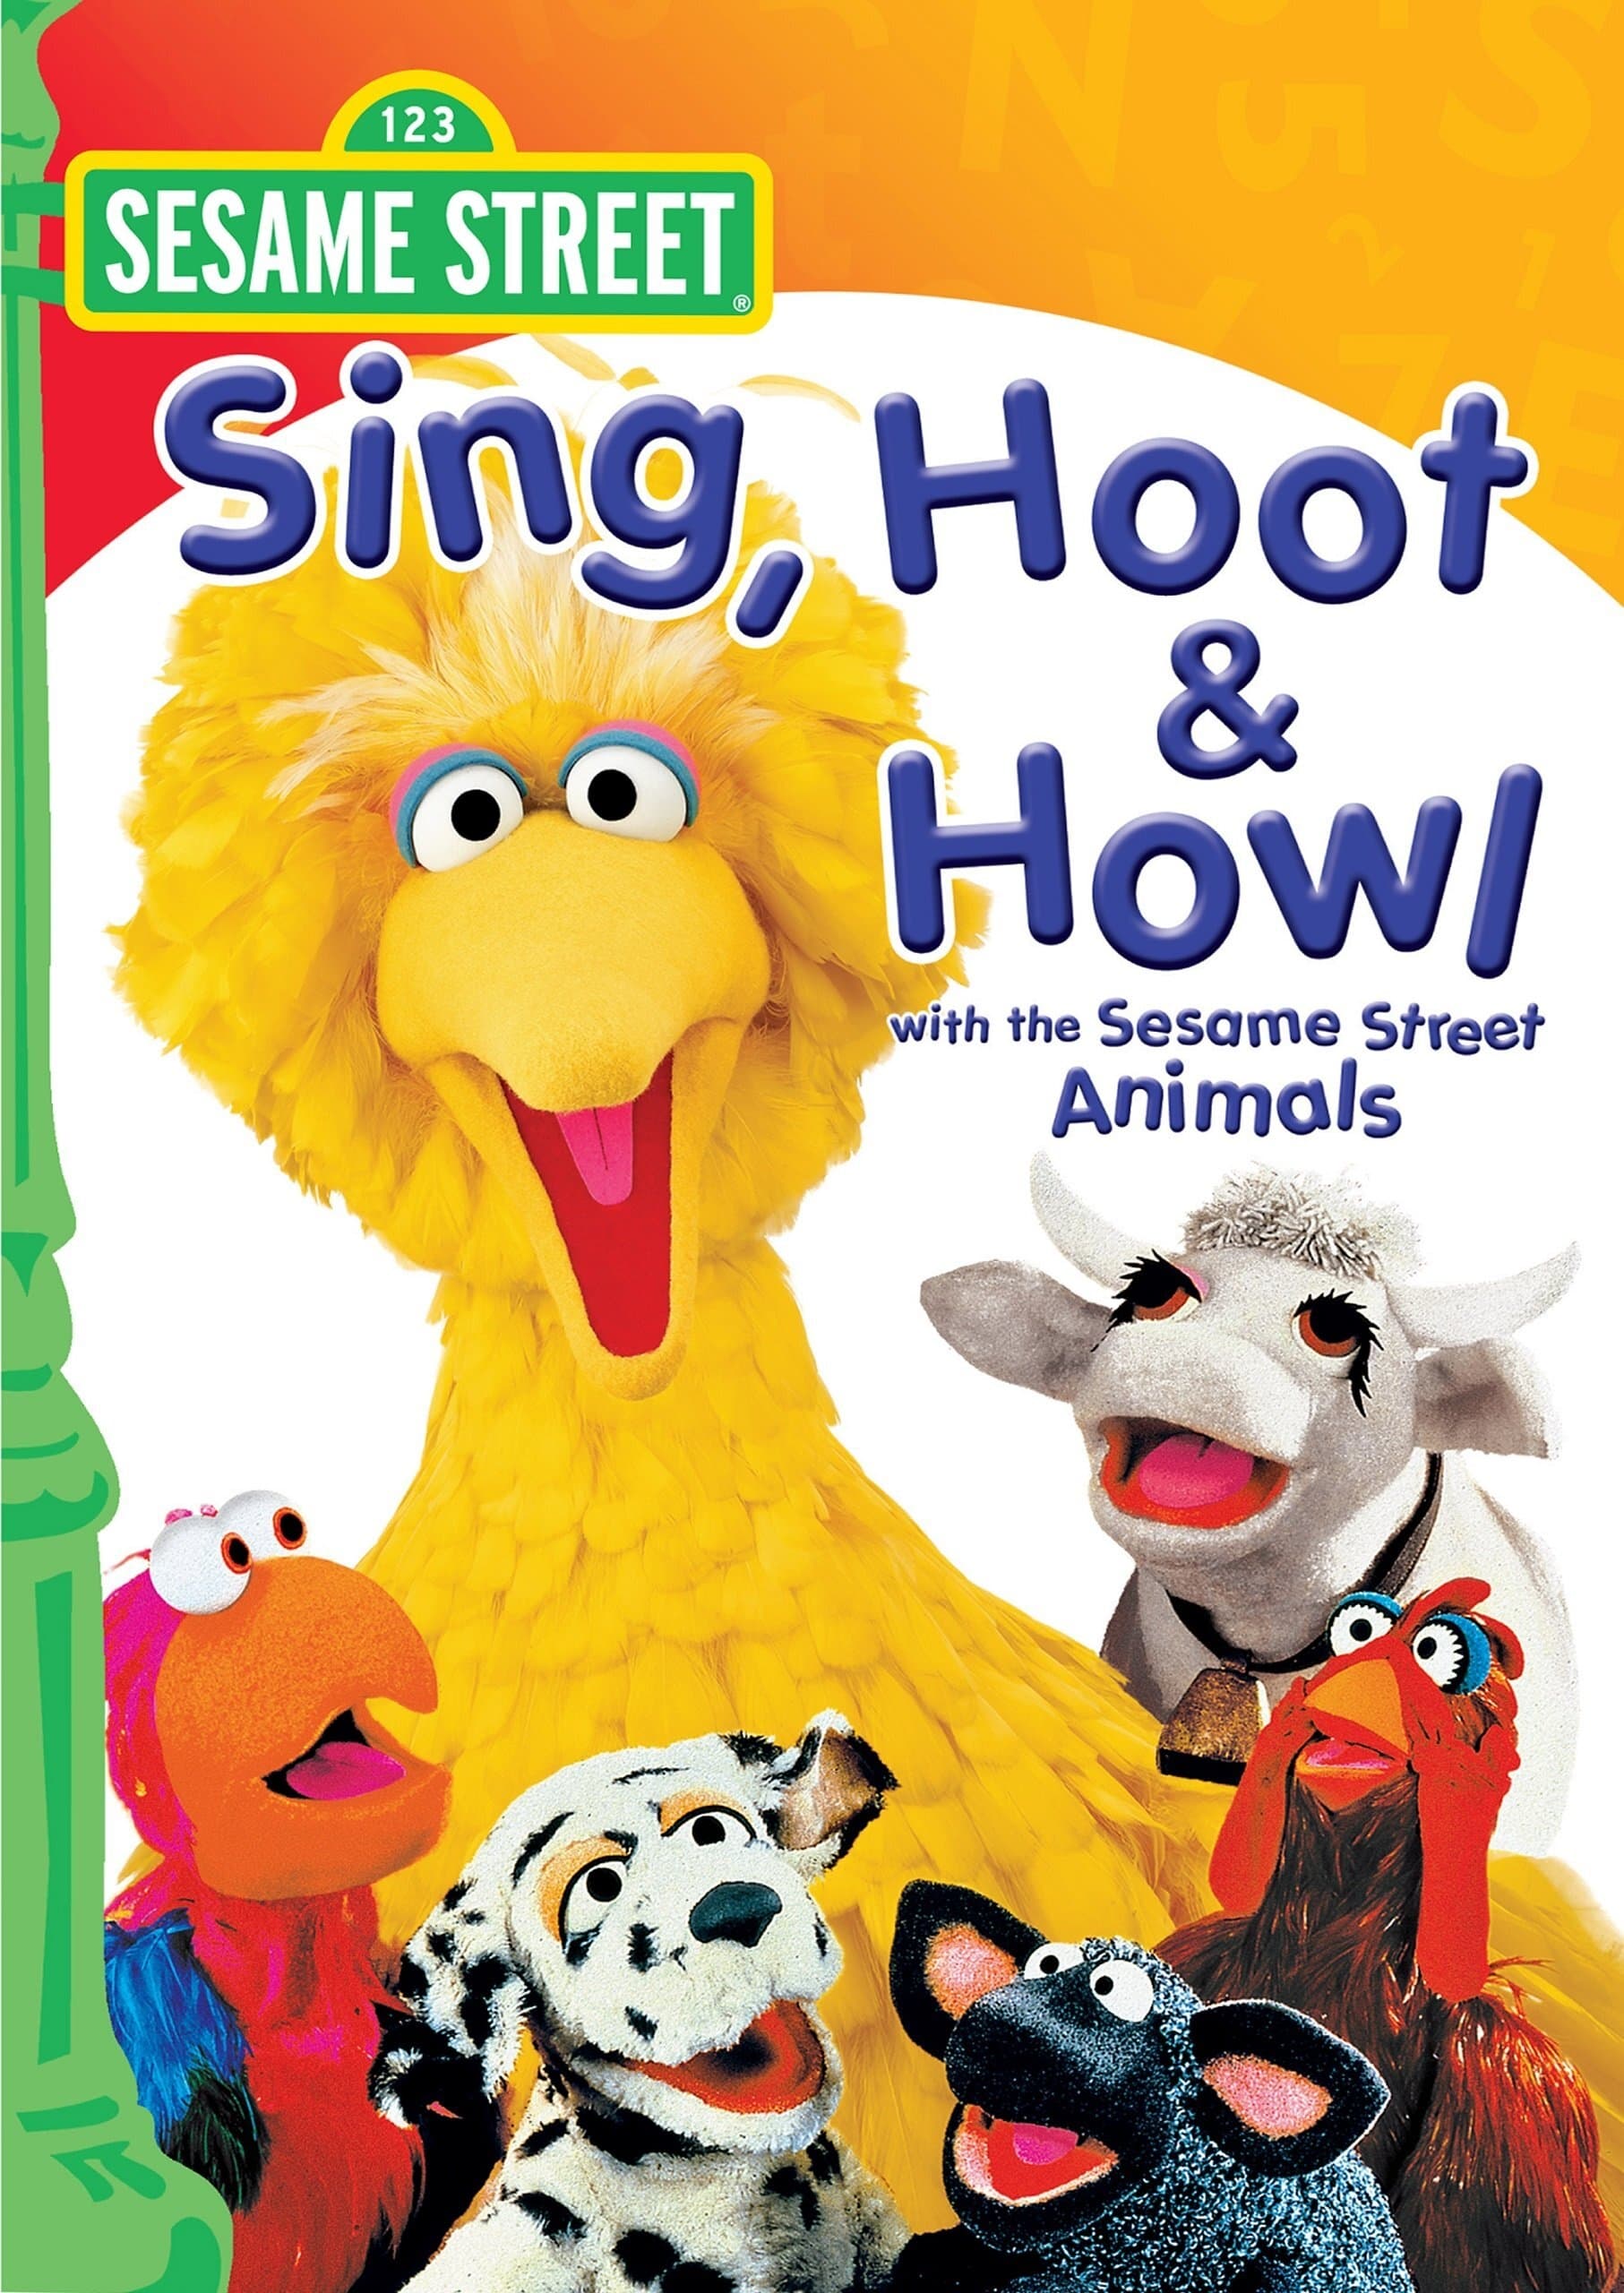 Sesame Street: Sing, Hoot & Howl with the Sesame Street Animals